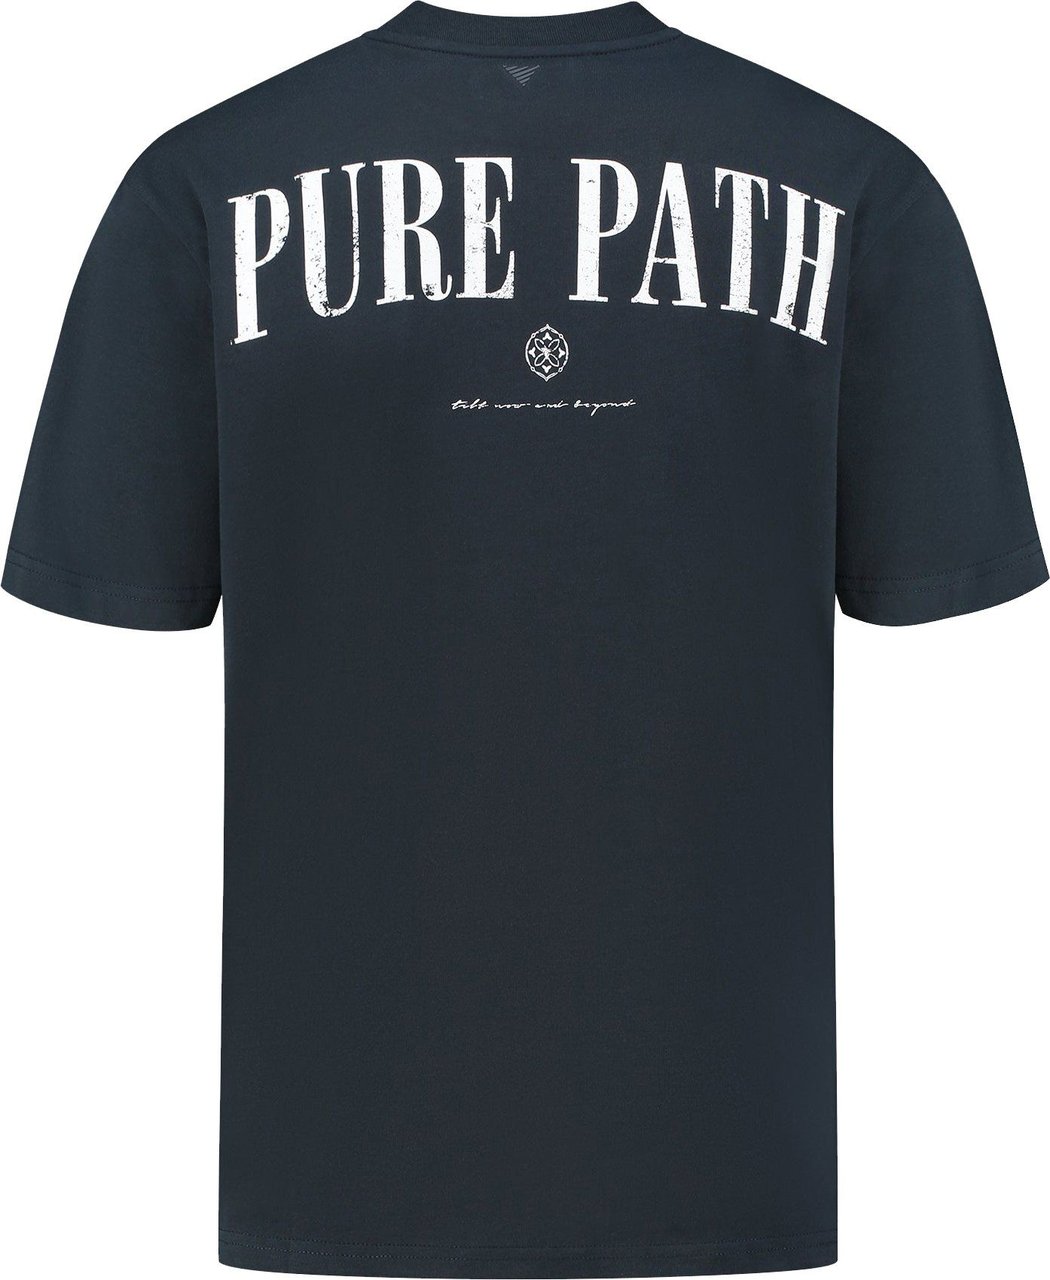 Pure Path Vintage logo tee Blauw